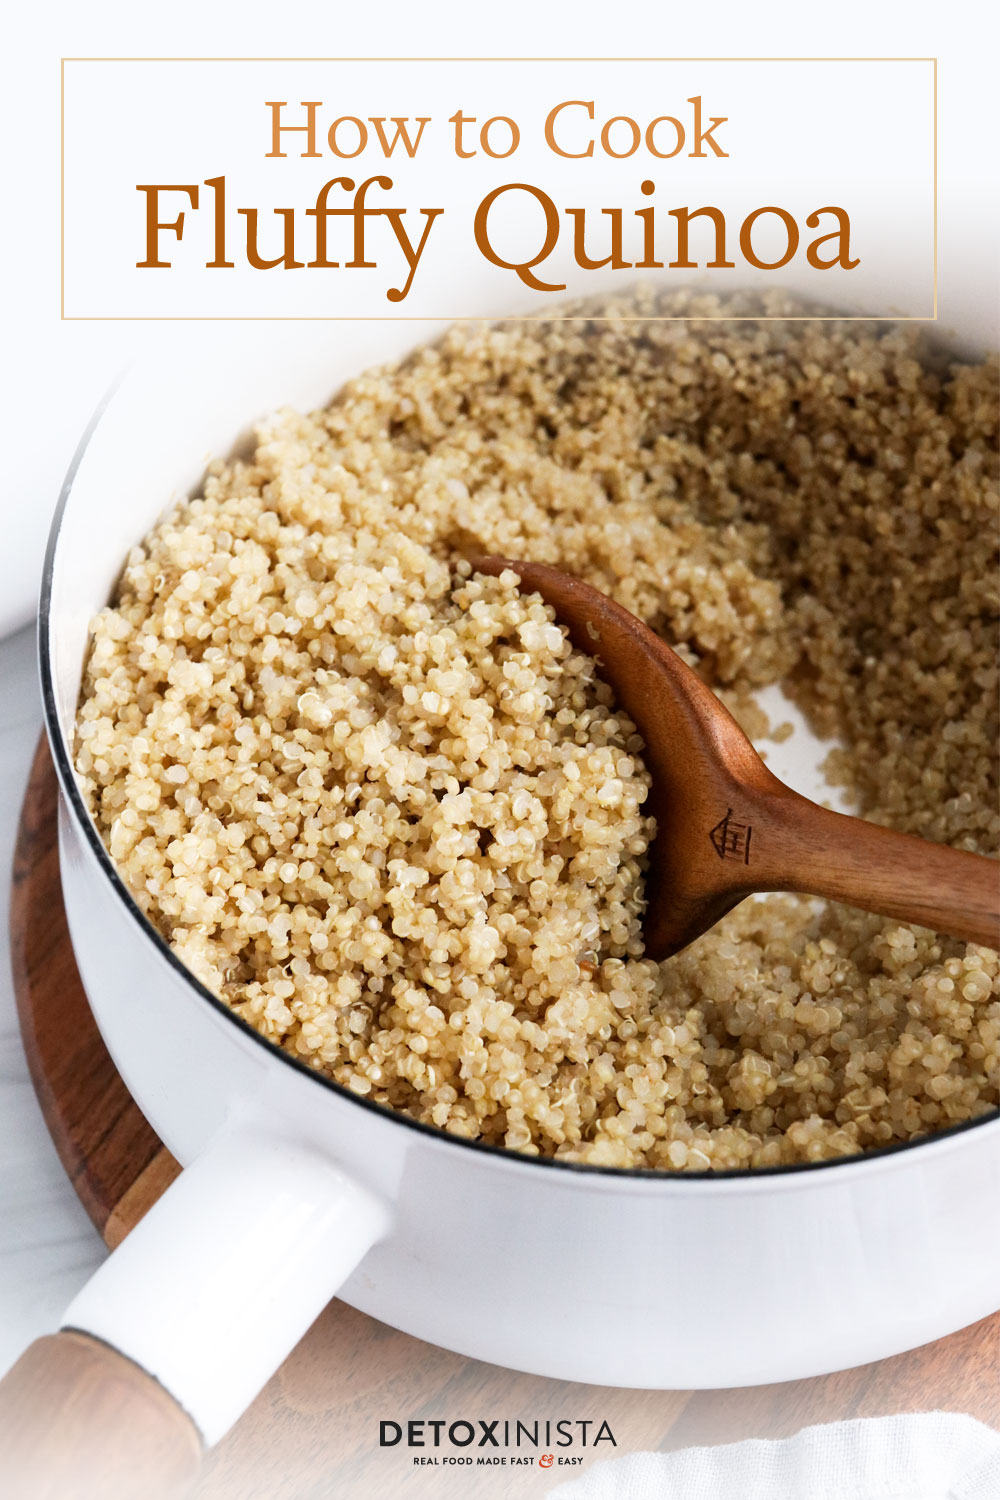 How to Cook Quinoa - Detoxinista